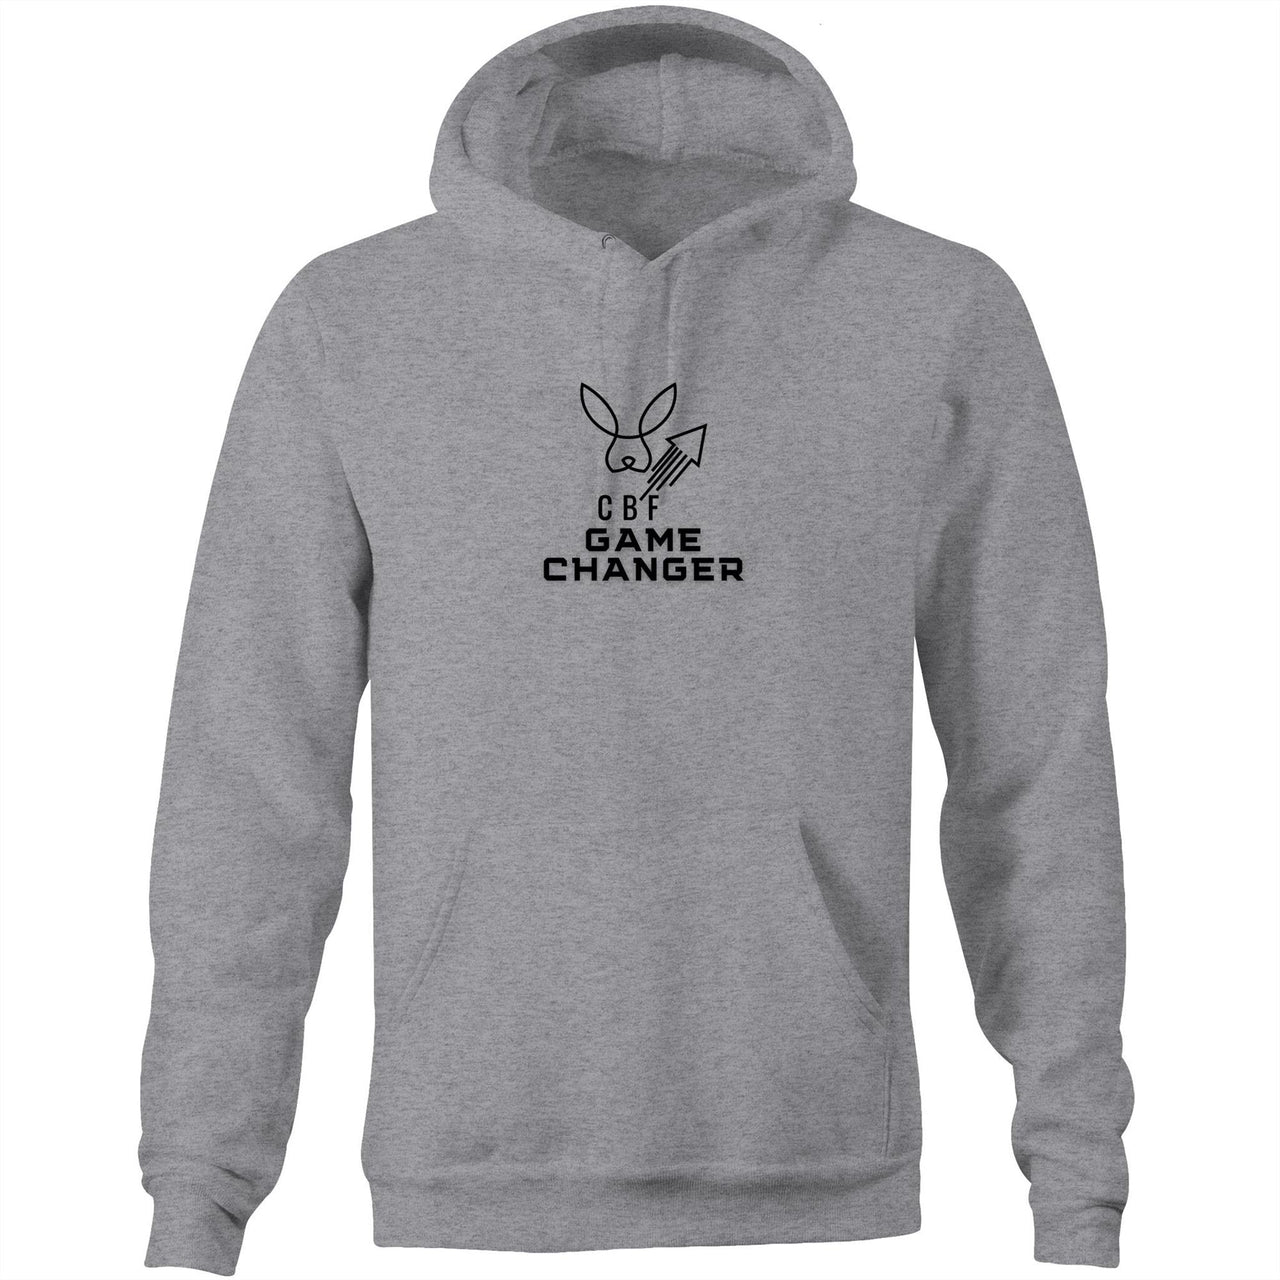 CBF Game Changer Rocket Pocket Hoodie Sweatshirt Grey Marle by CBF Clothing